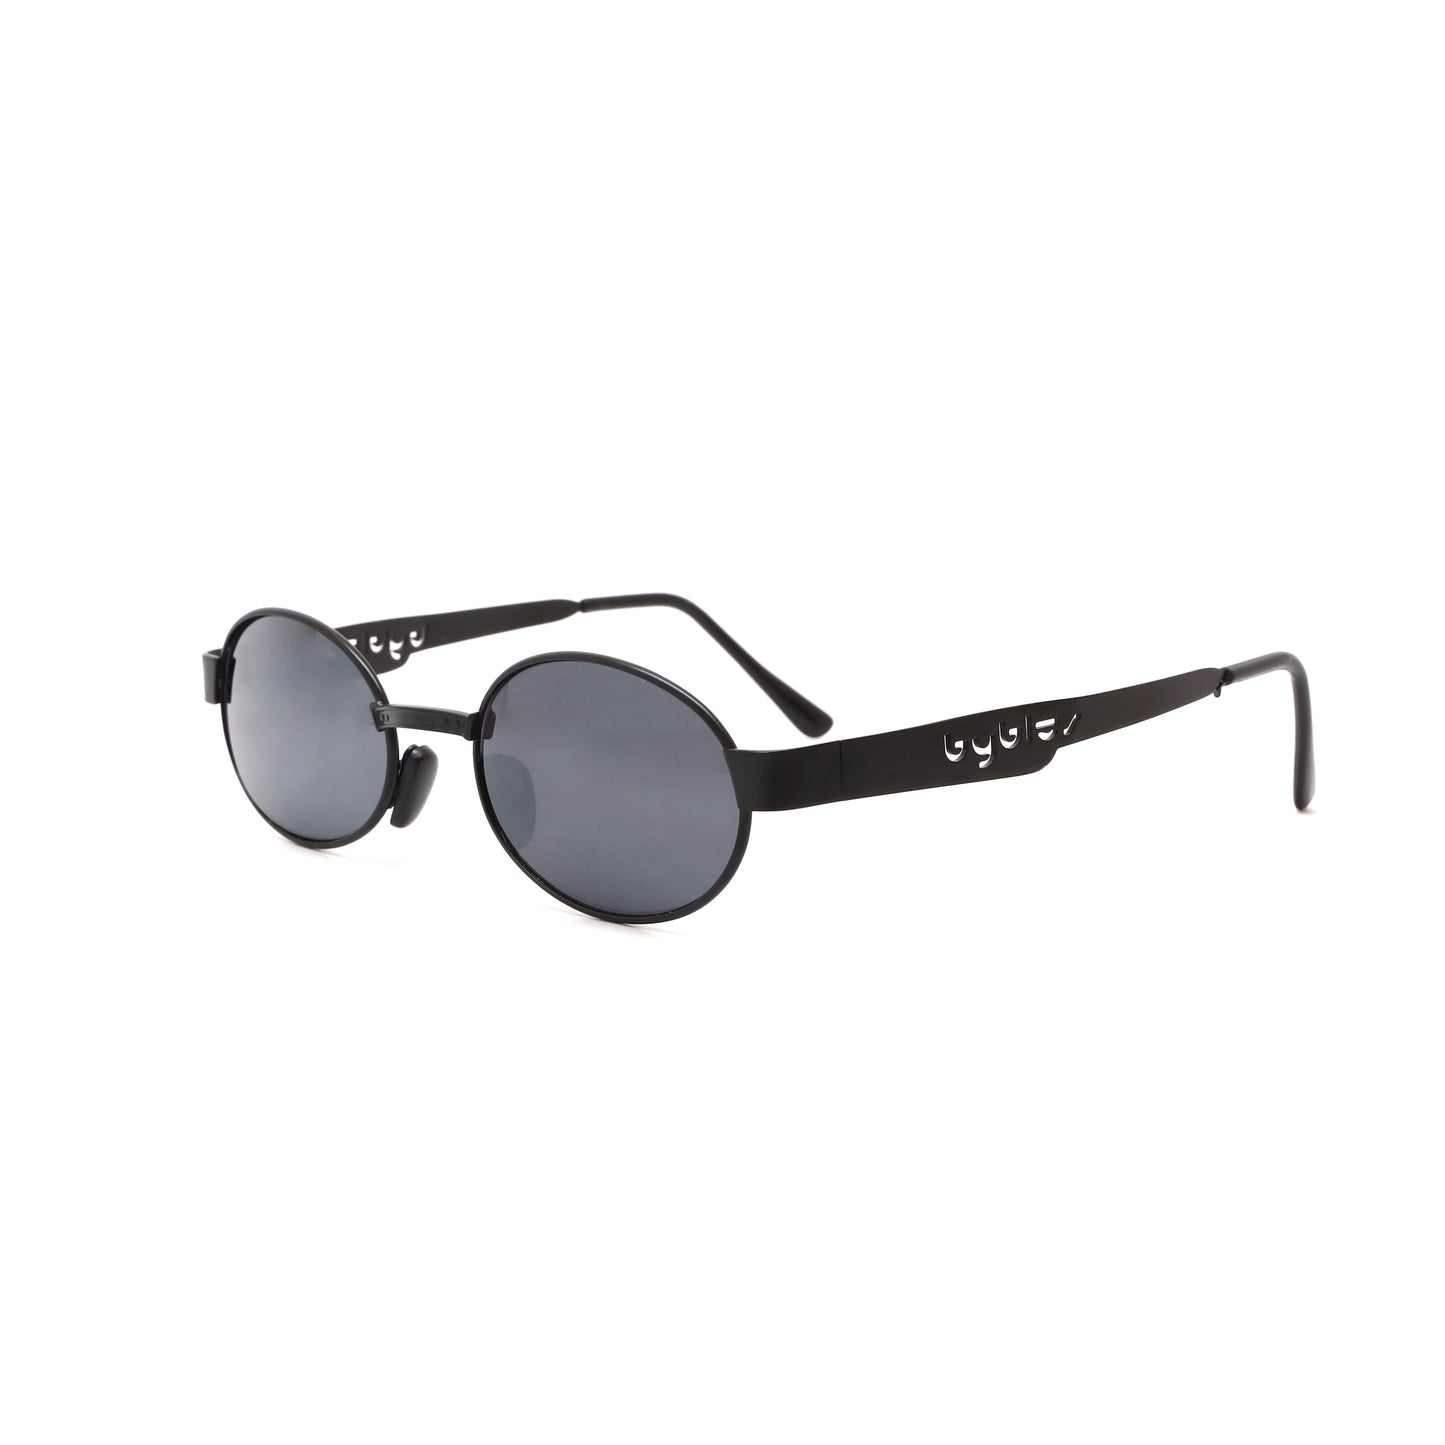 Deadstock Vintage Standard Size Santa Fe Oval Sunglasses - Black